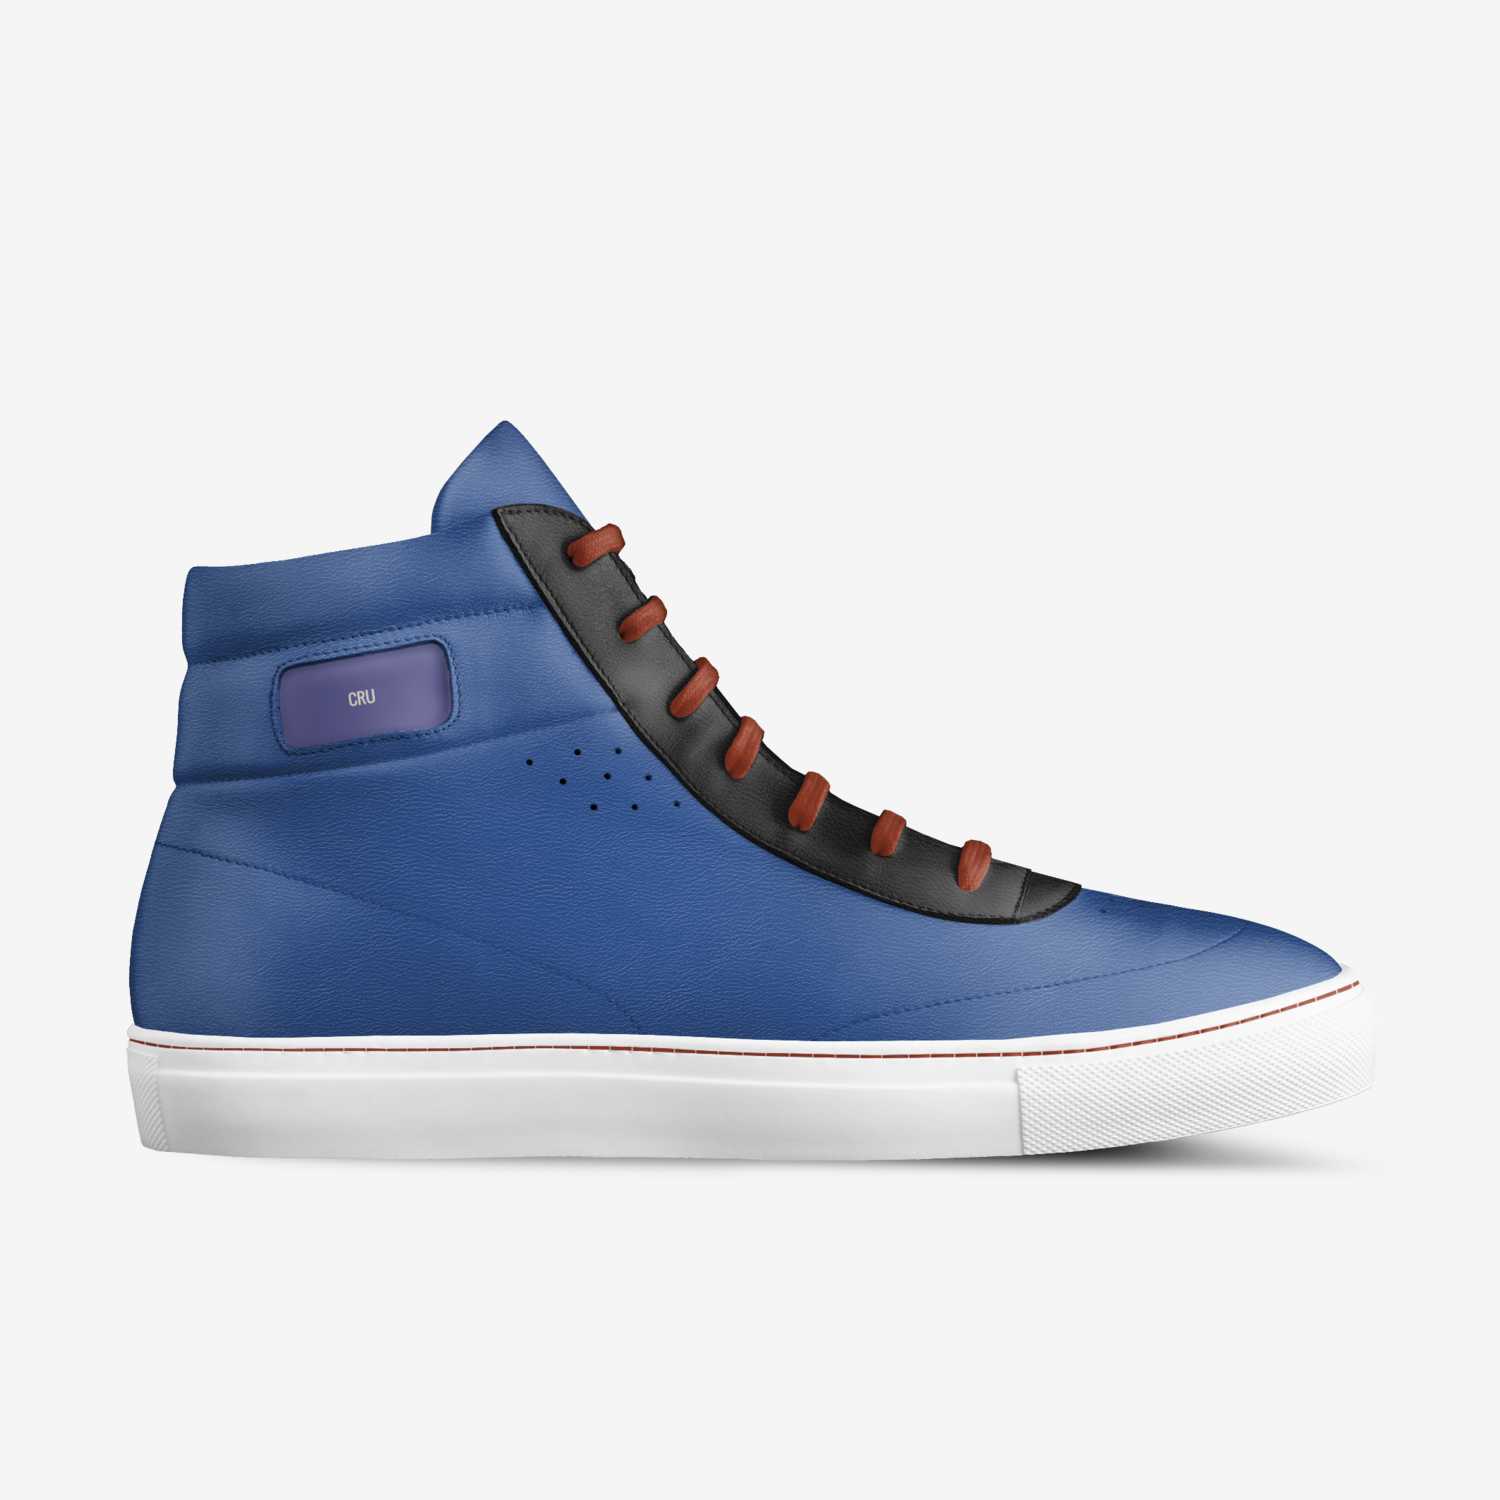 CrU | A Custom Shoe concept by Logan Kown